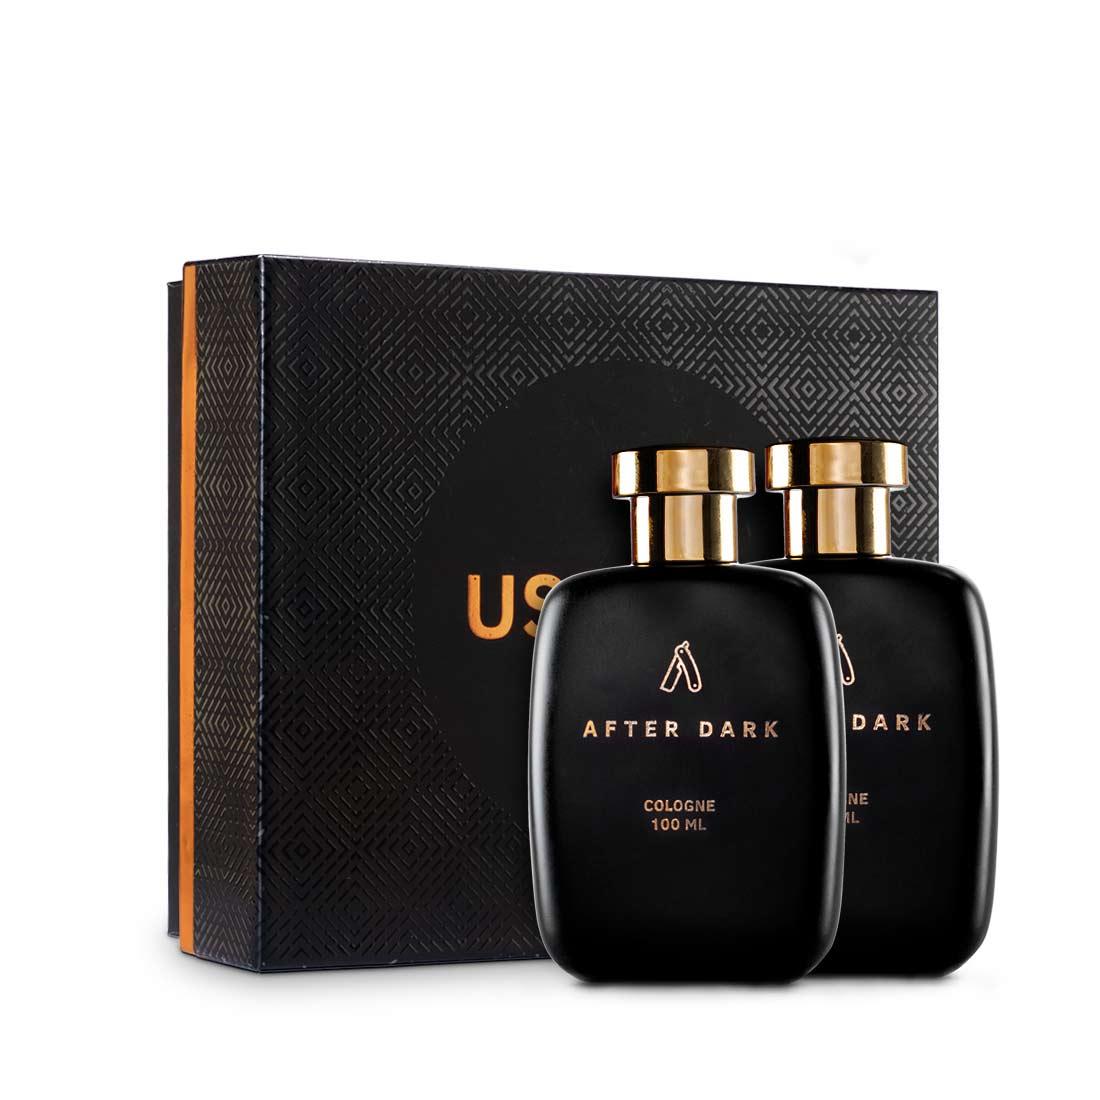 Ustraa Fragrance Gift Box For Men: Cologne- After Dark (100ml)